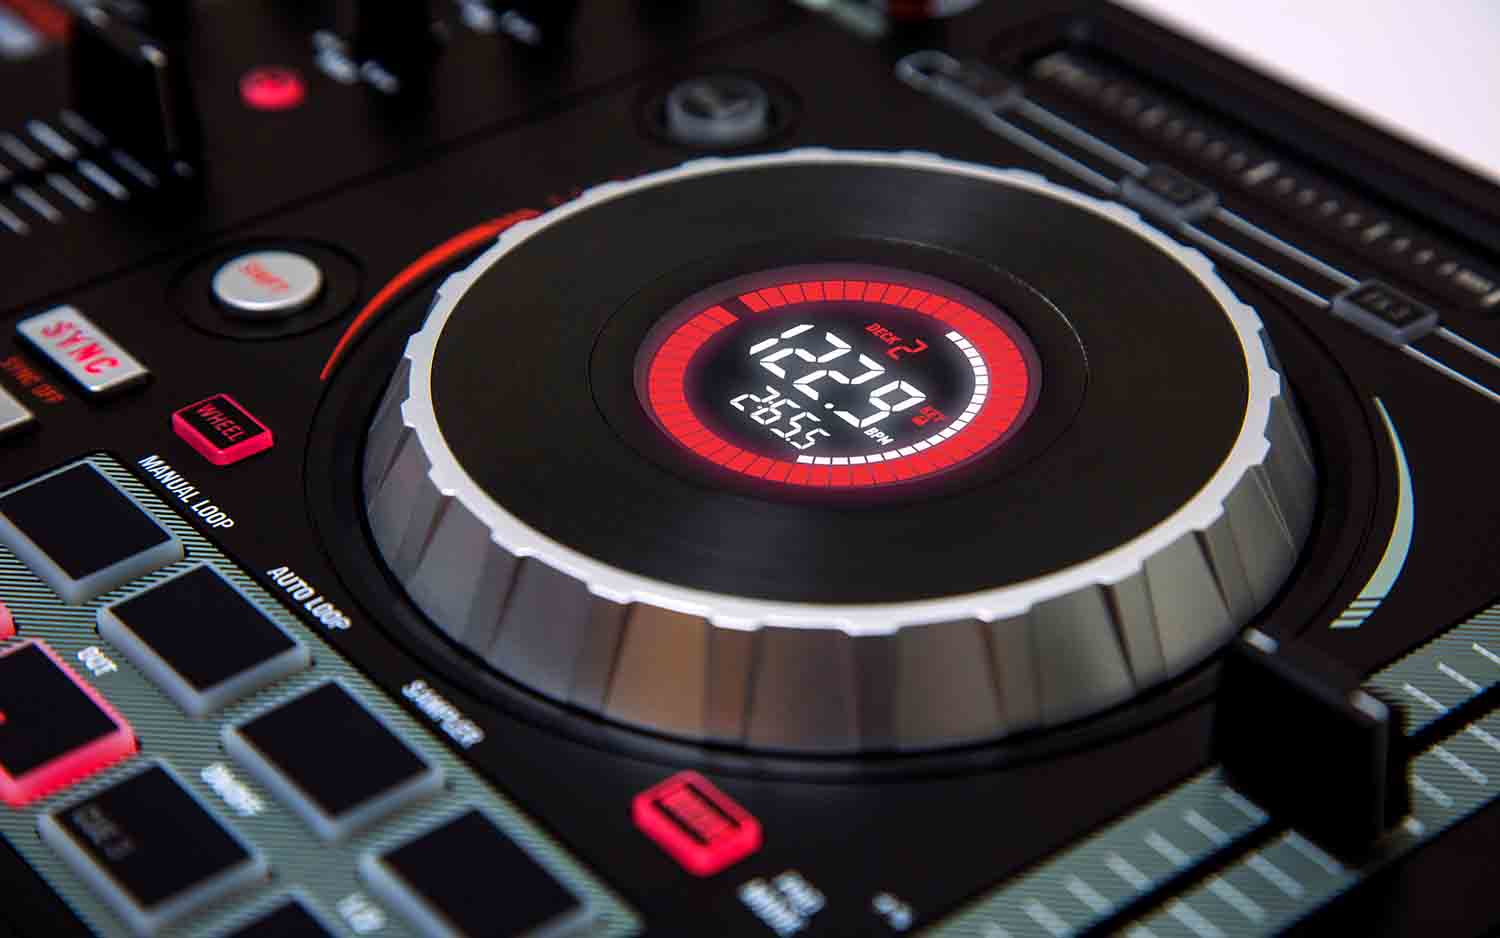 Numark Mixtrack Platinum FX DJ Controller with Jog Wheel Display - Hollywood DJ